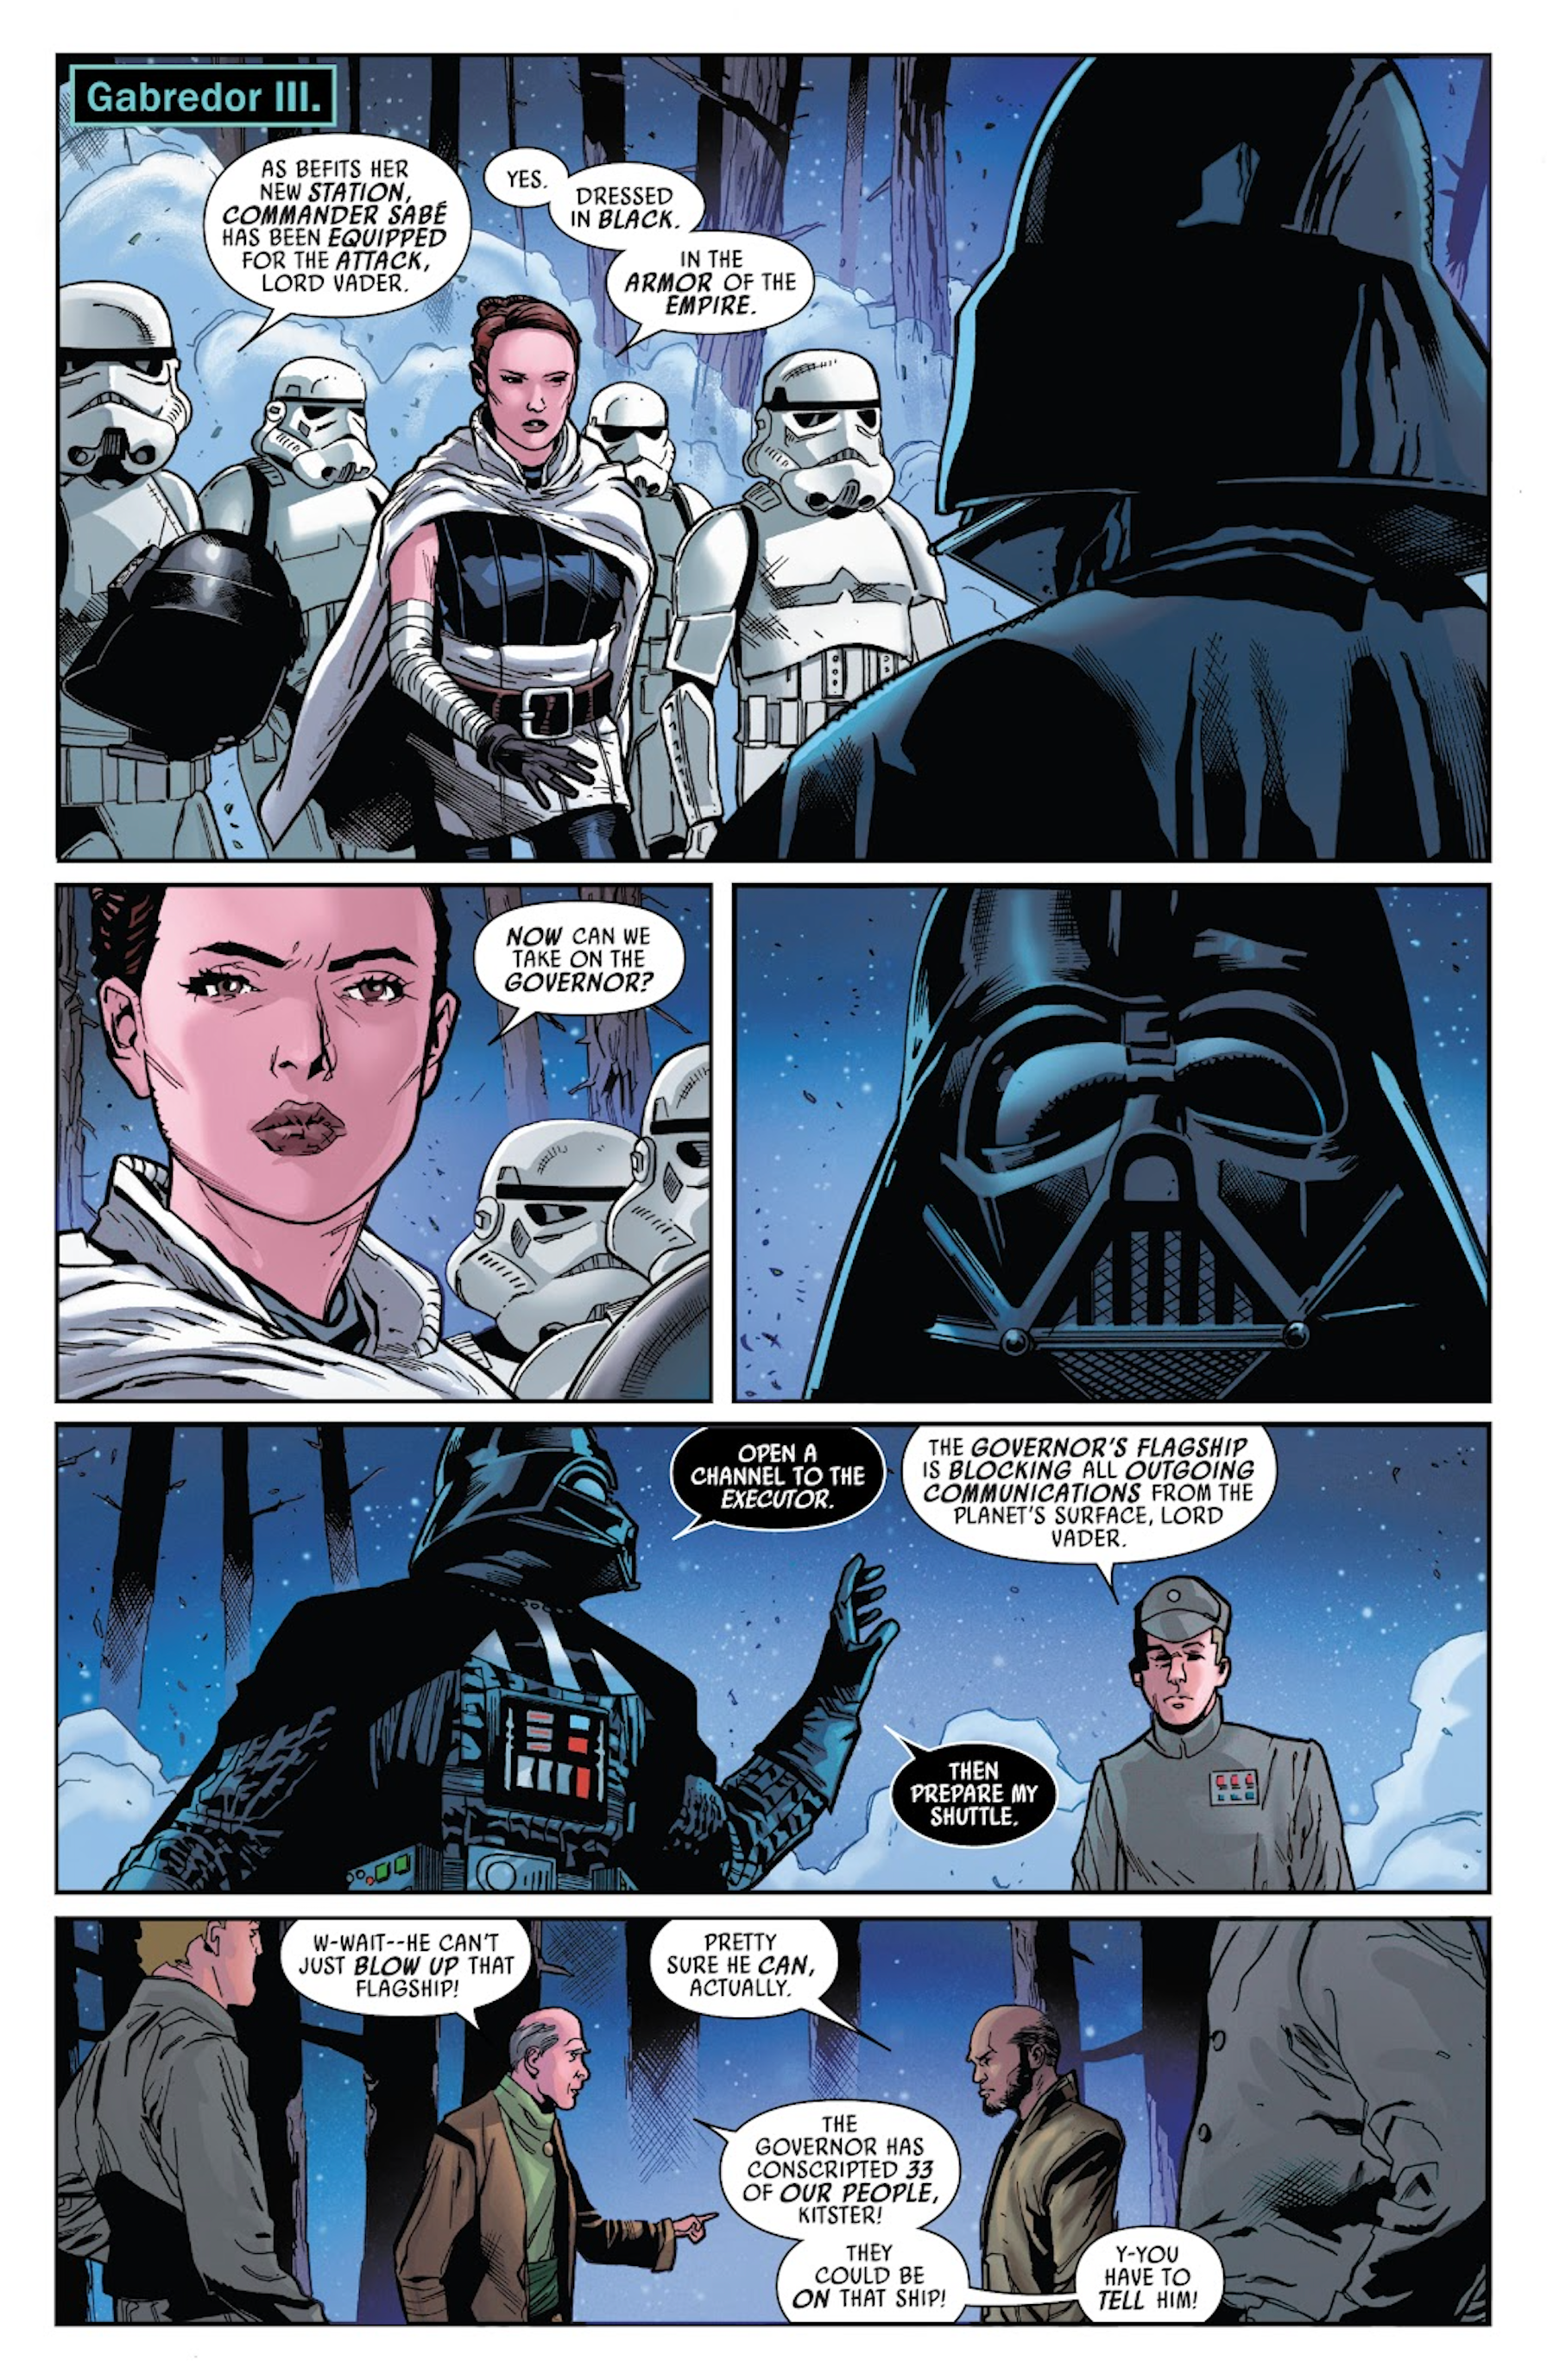 Darth Vader and Kitster